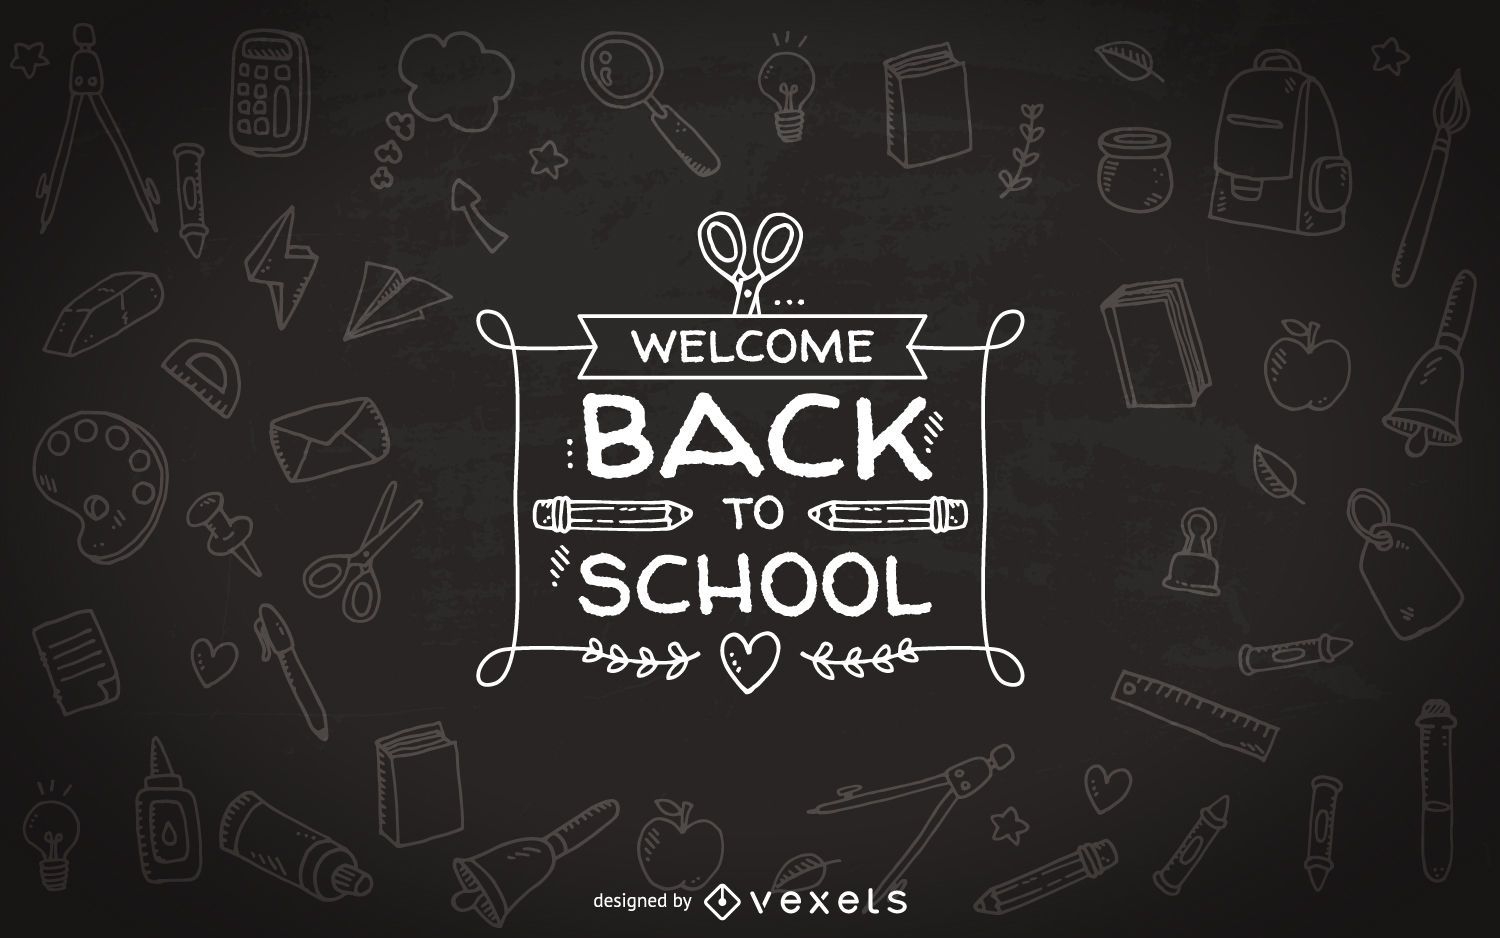 2cool4school element. Back to School надпись. Школьная доска. Back to School фон. Back to School (в школу).